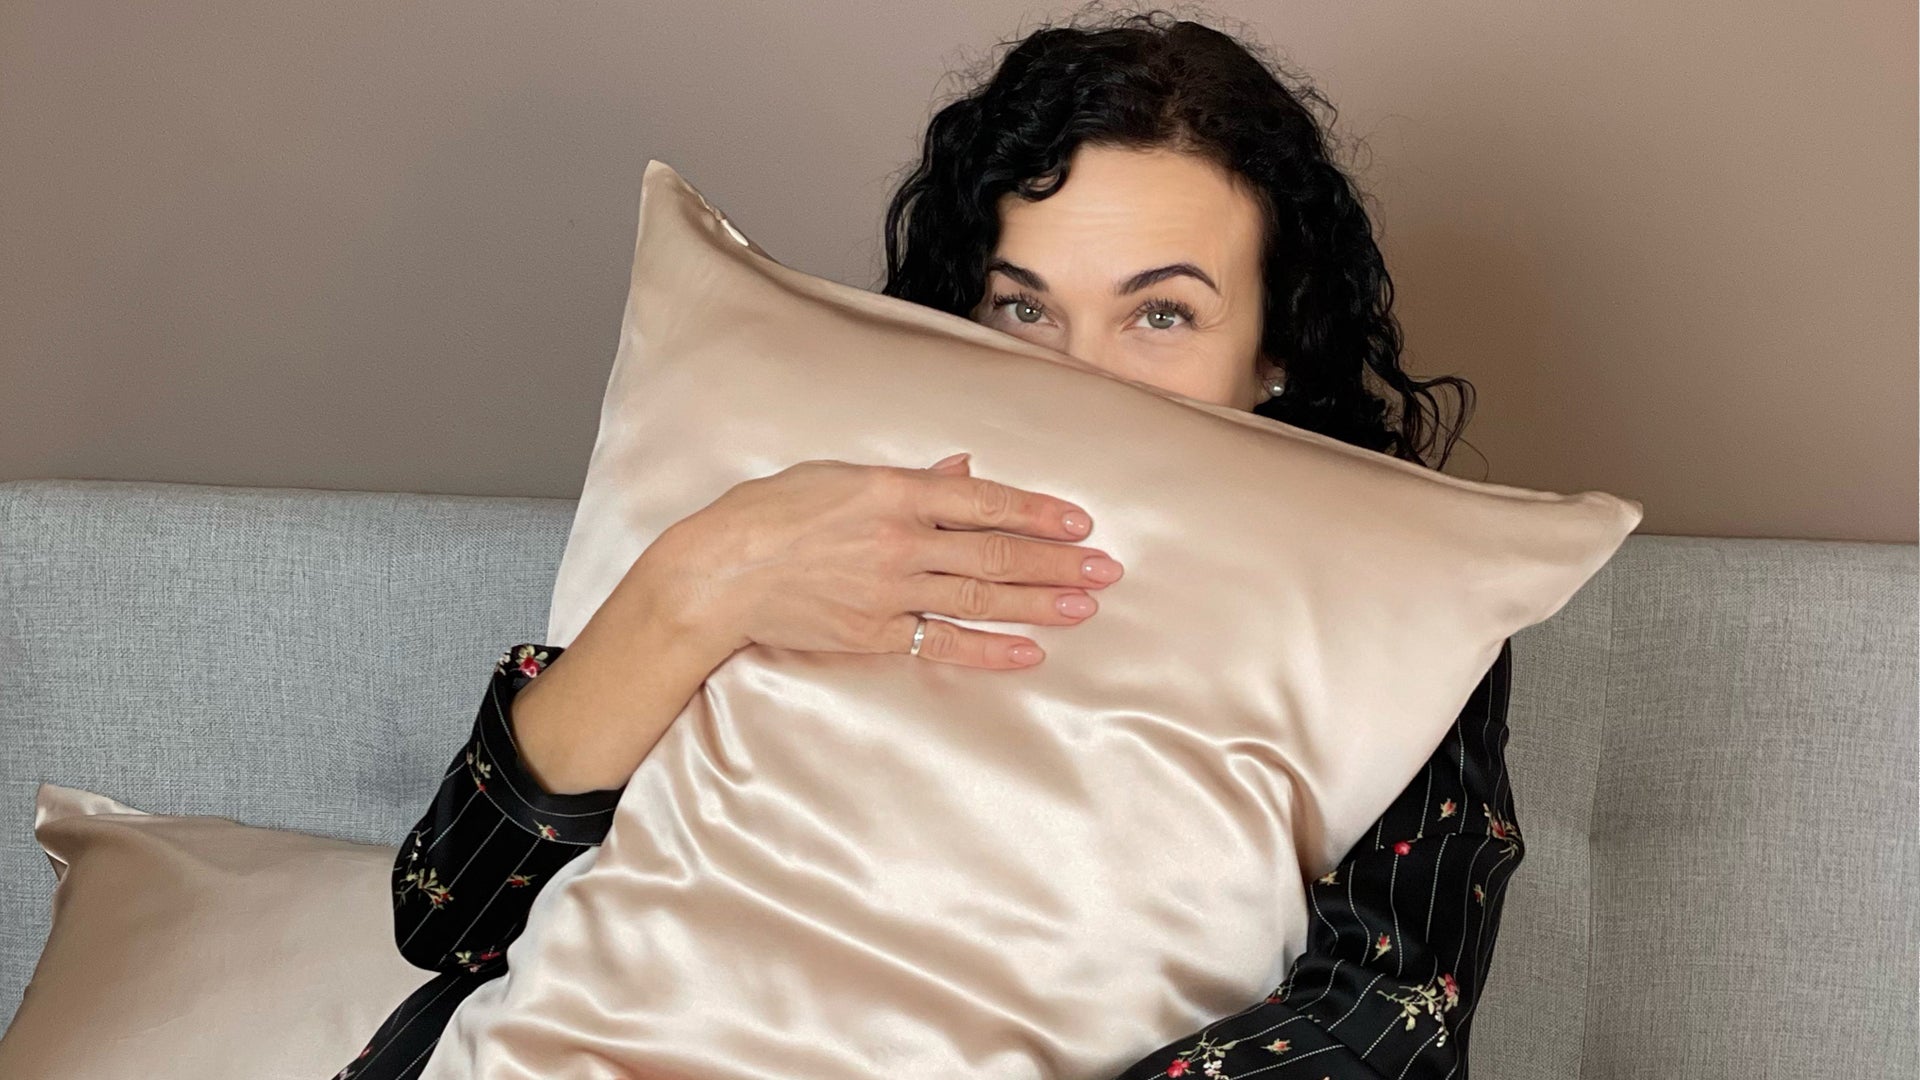 Silk Pillowcase. Silky Soft. Silk Both Sides. Luxury Pillow Cases